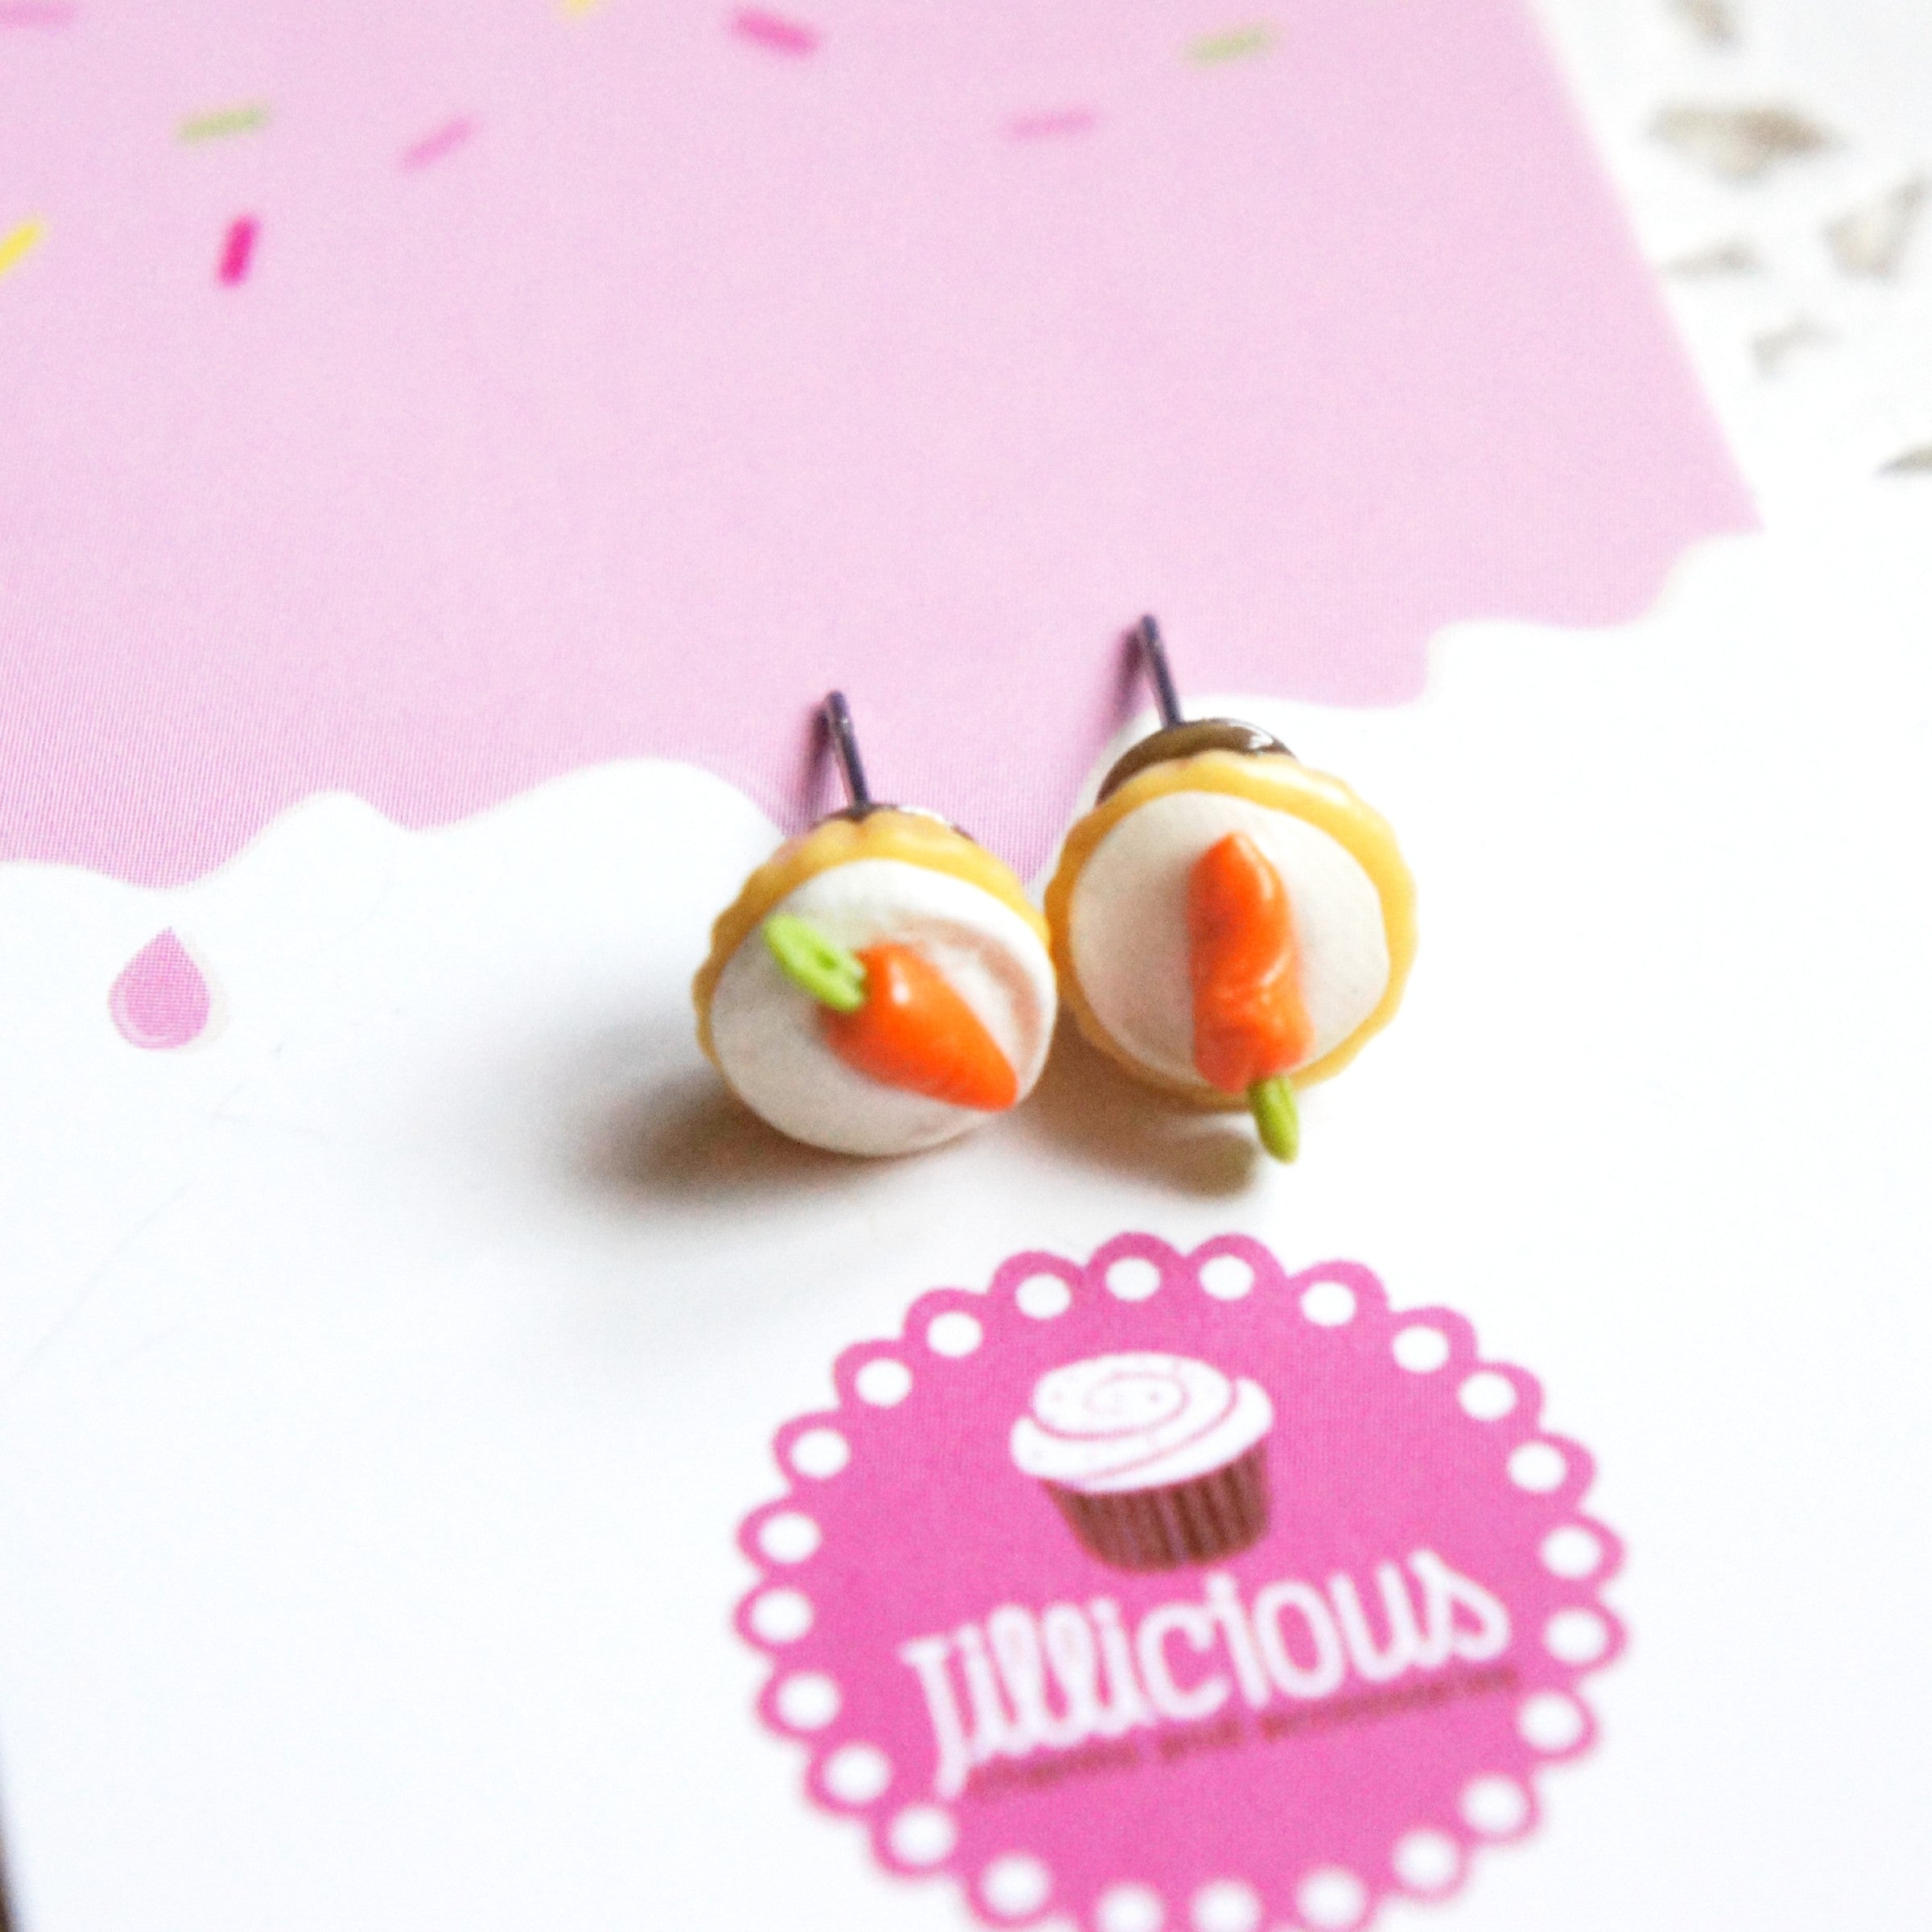 Carrot Cupcake Stud Earrings